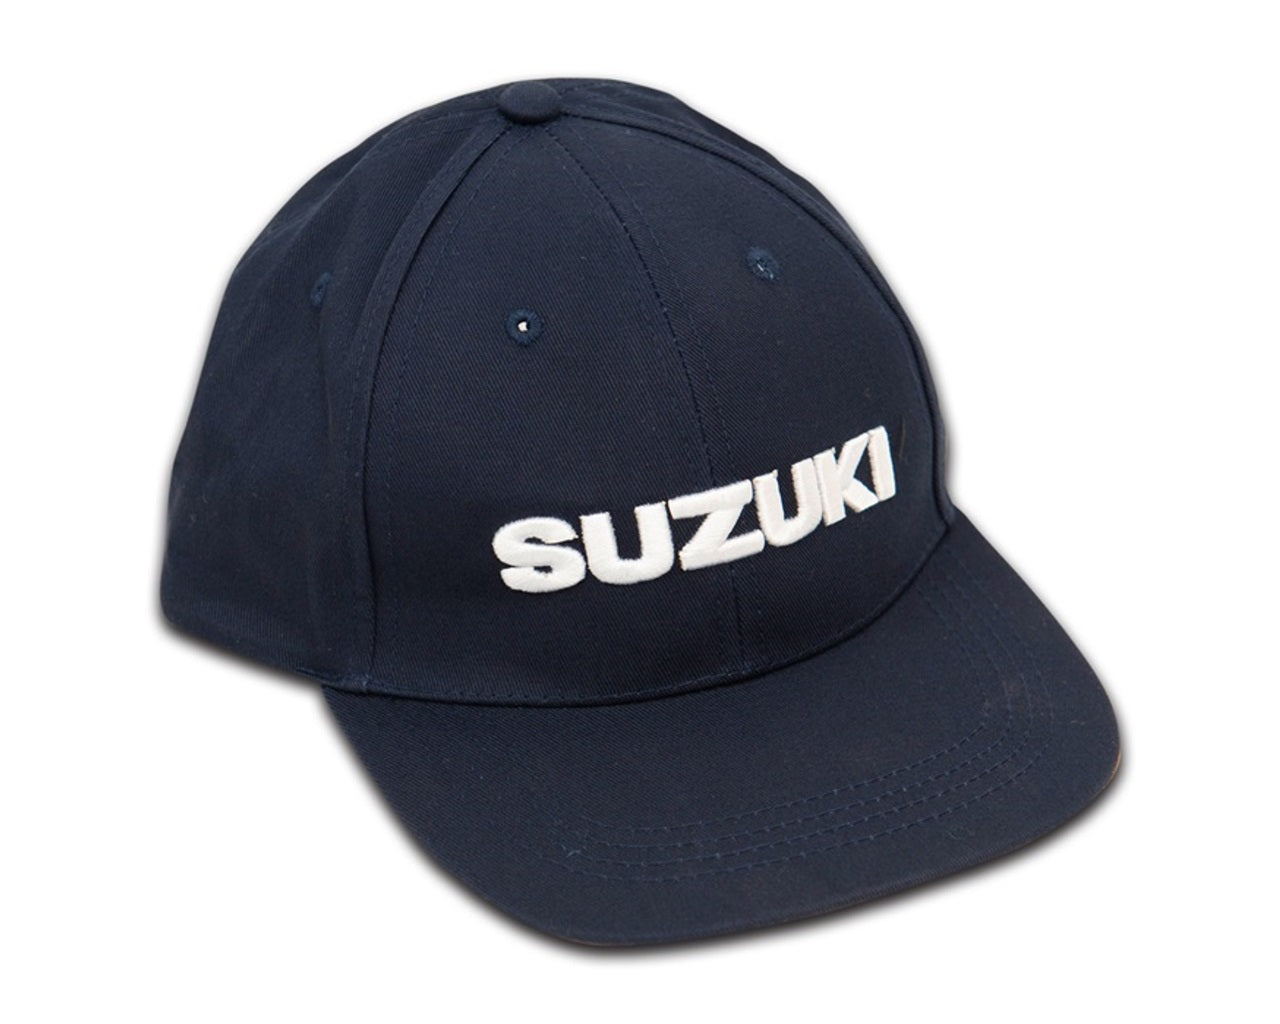 Suzuki Baseball Hat Navy Snap Back  990A0-17202-NVY